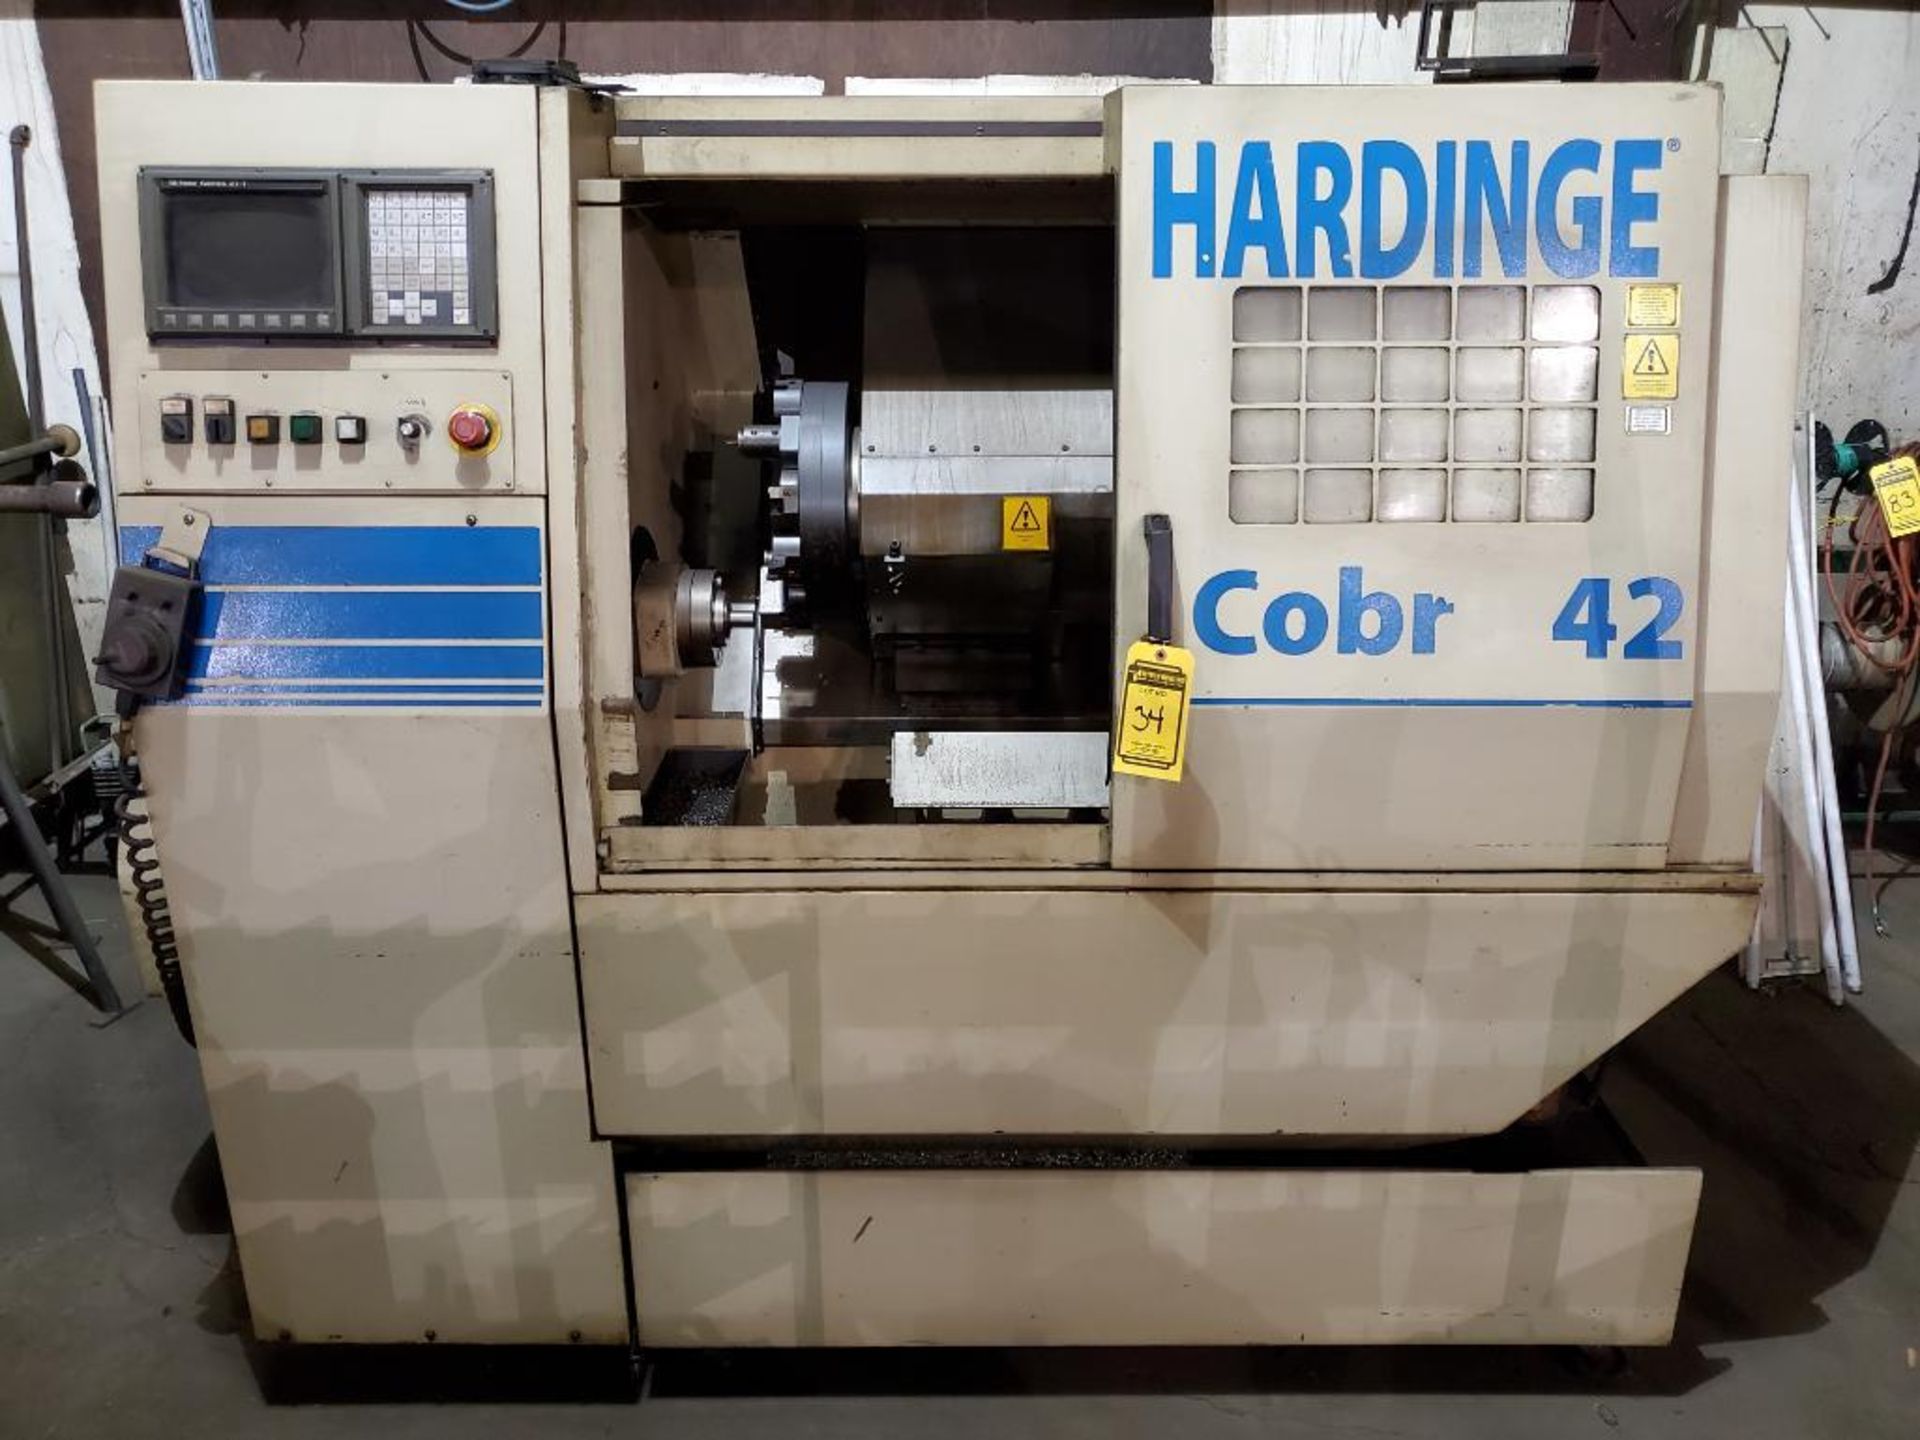 HARDINGE COBRA 42 HORIZONTAL CNC LATHE, GE FANUC SERIES 21-T DRO CNC CONTROL, FANUC PENDANT, S/N C-1 - Image 12 of 16